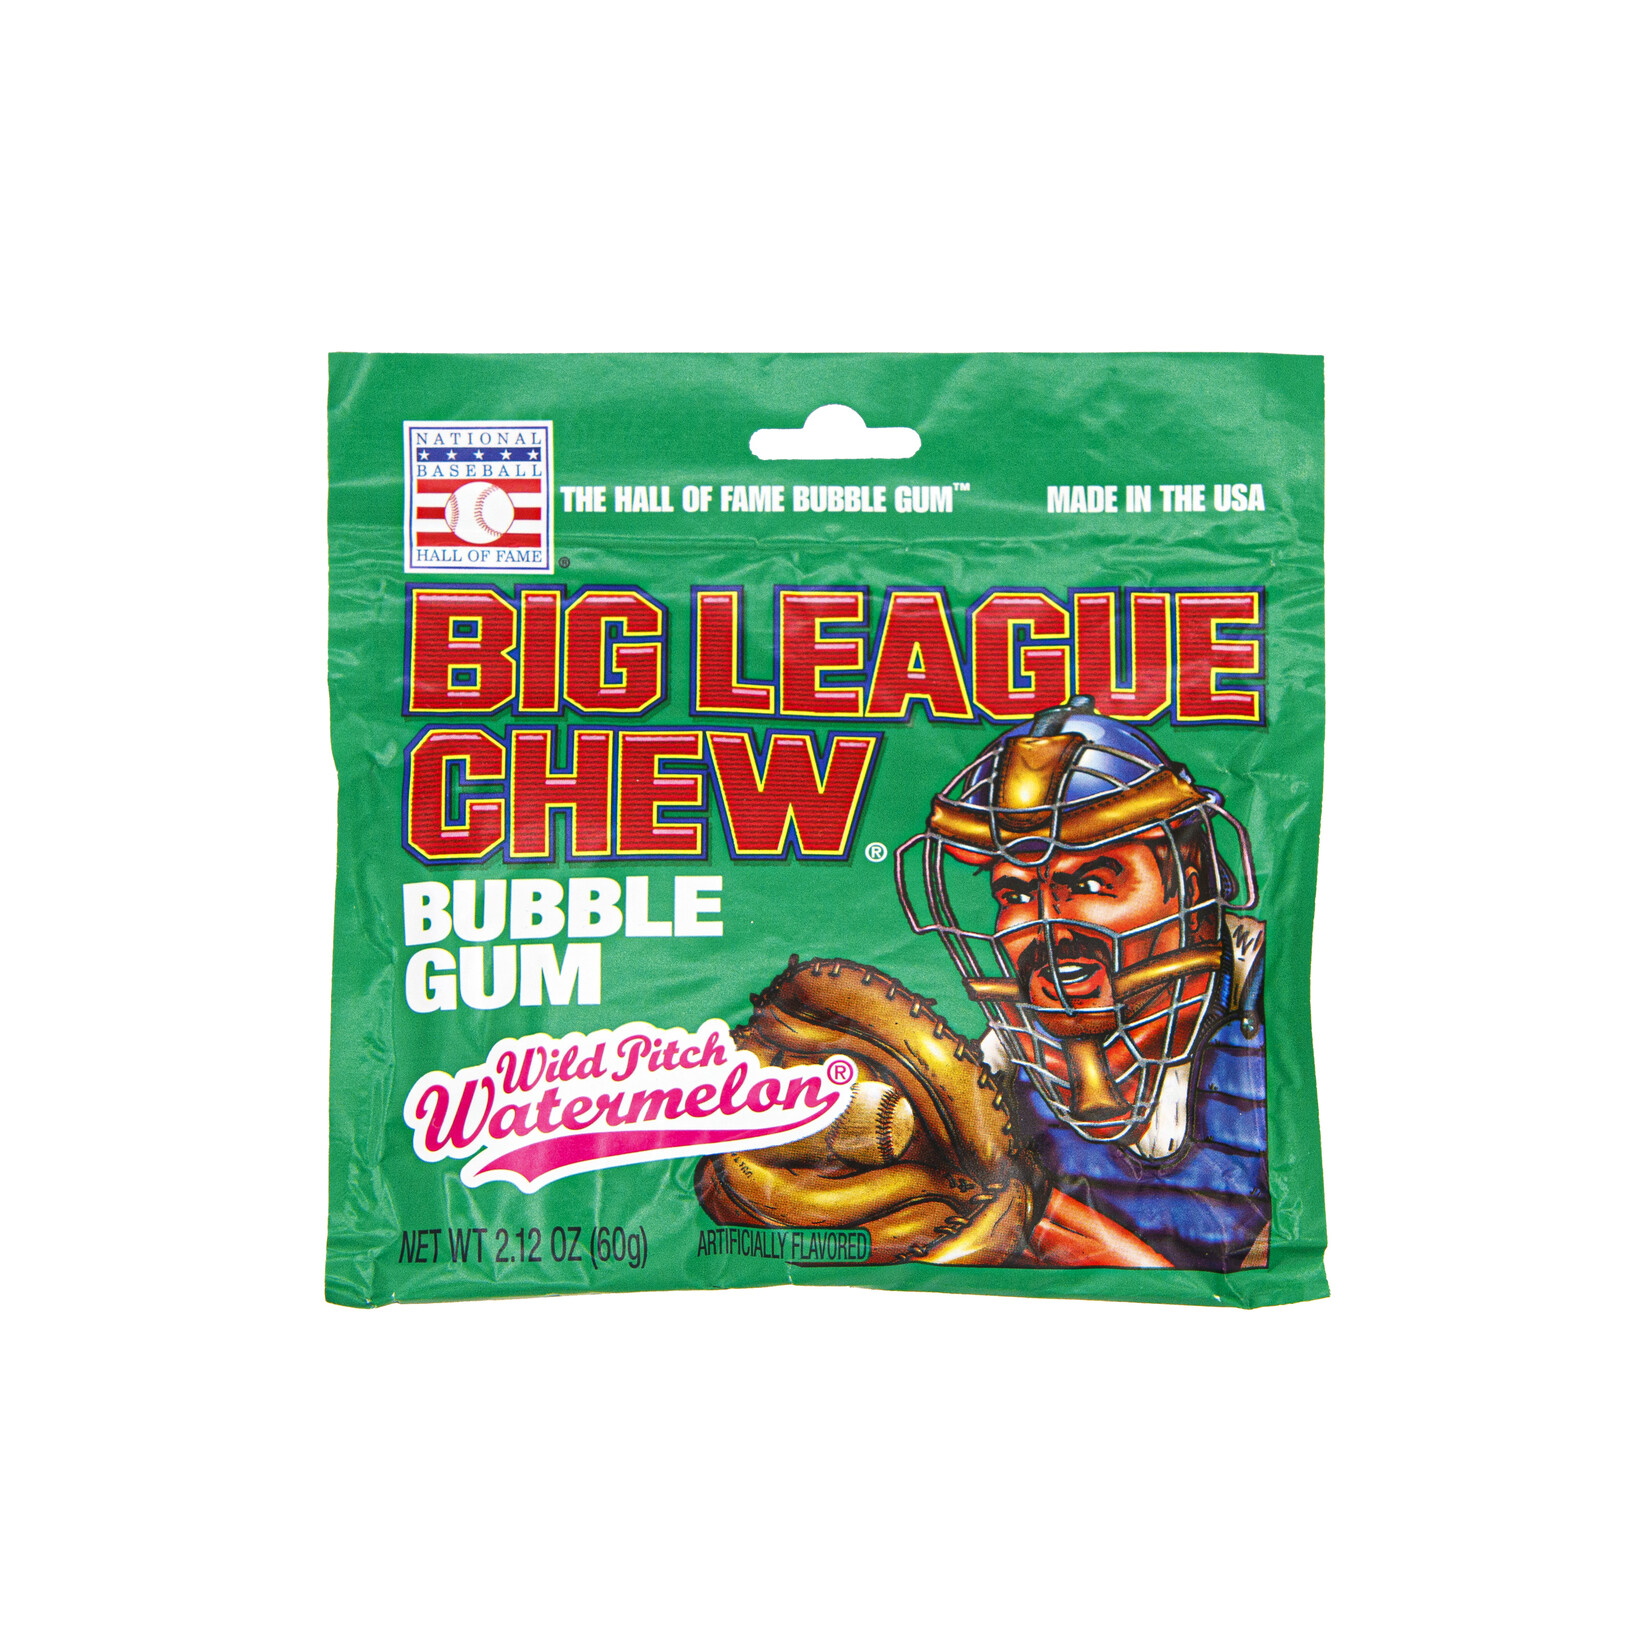 Big League Chew Big League Chew watermelon gum